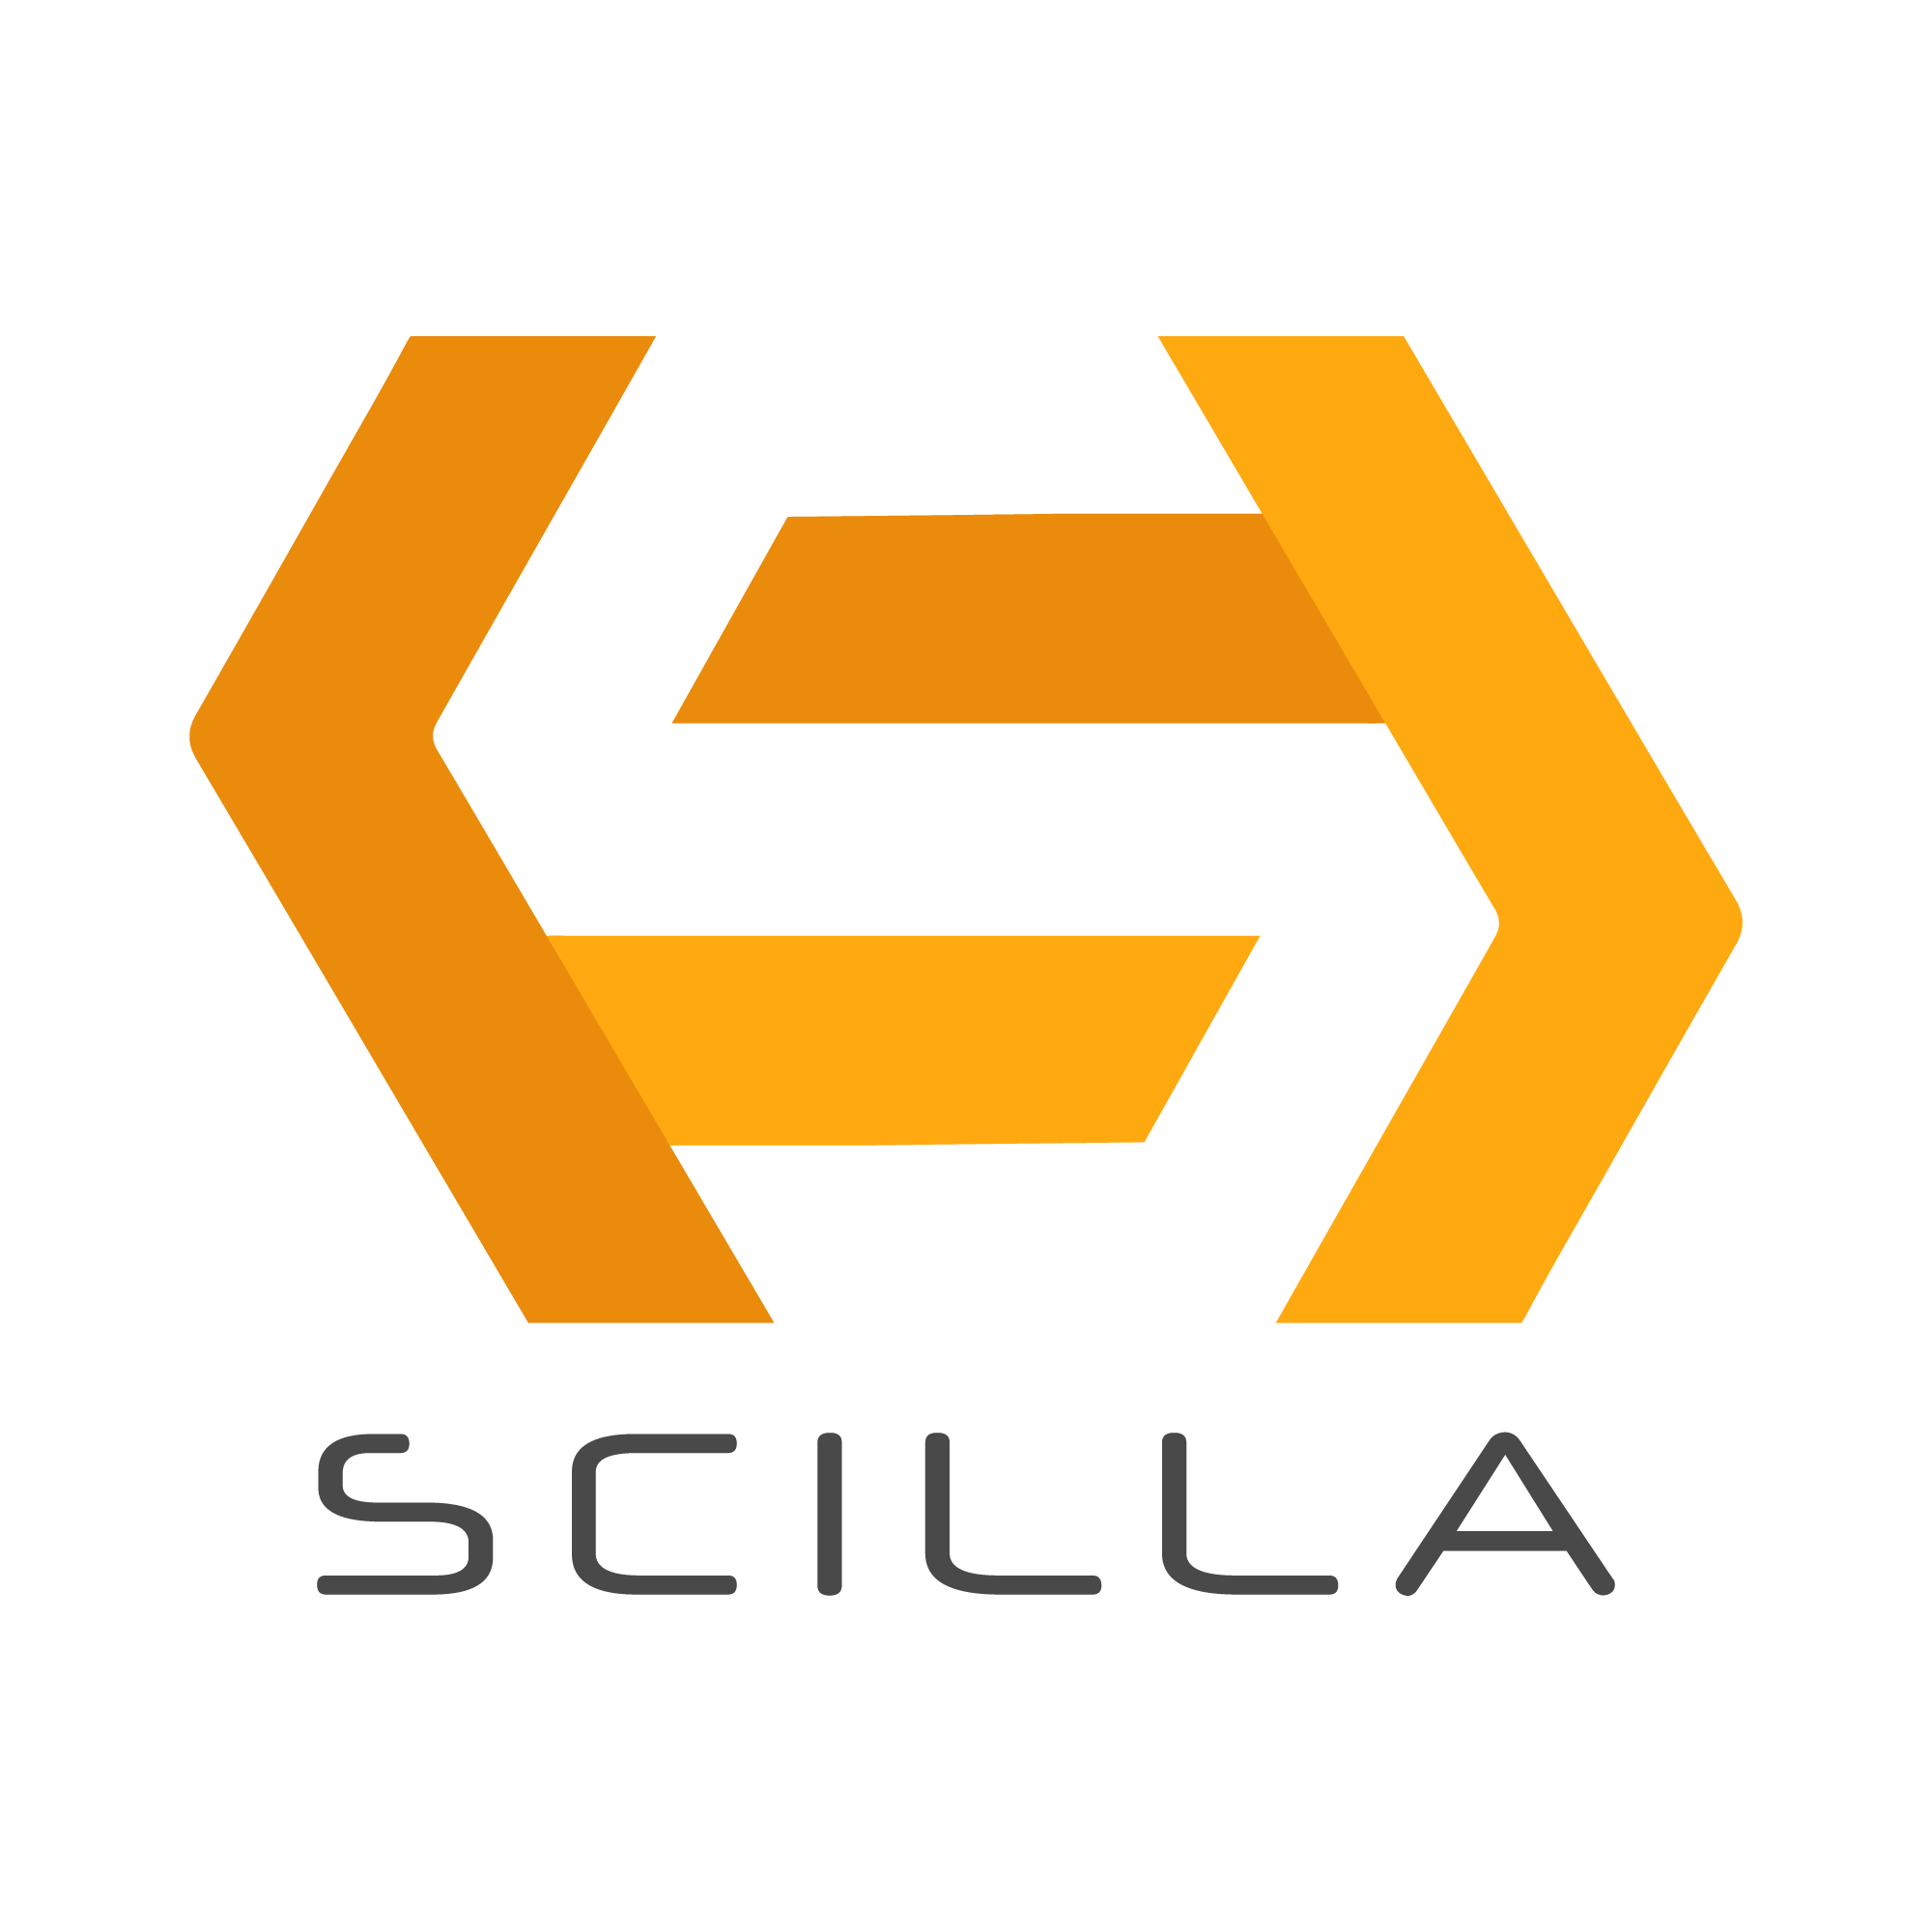 _images/scilla-logo-color-transparent.png